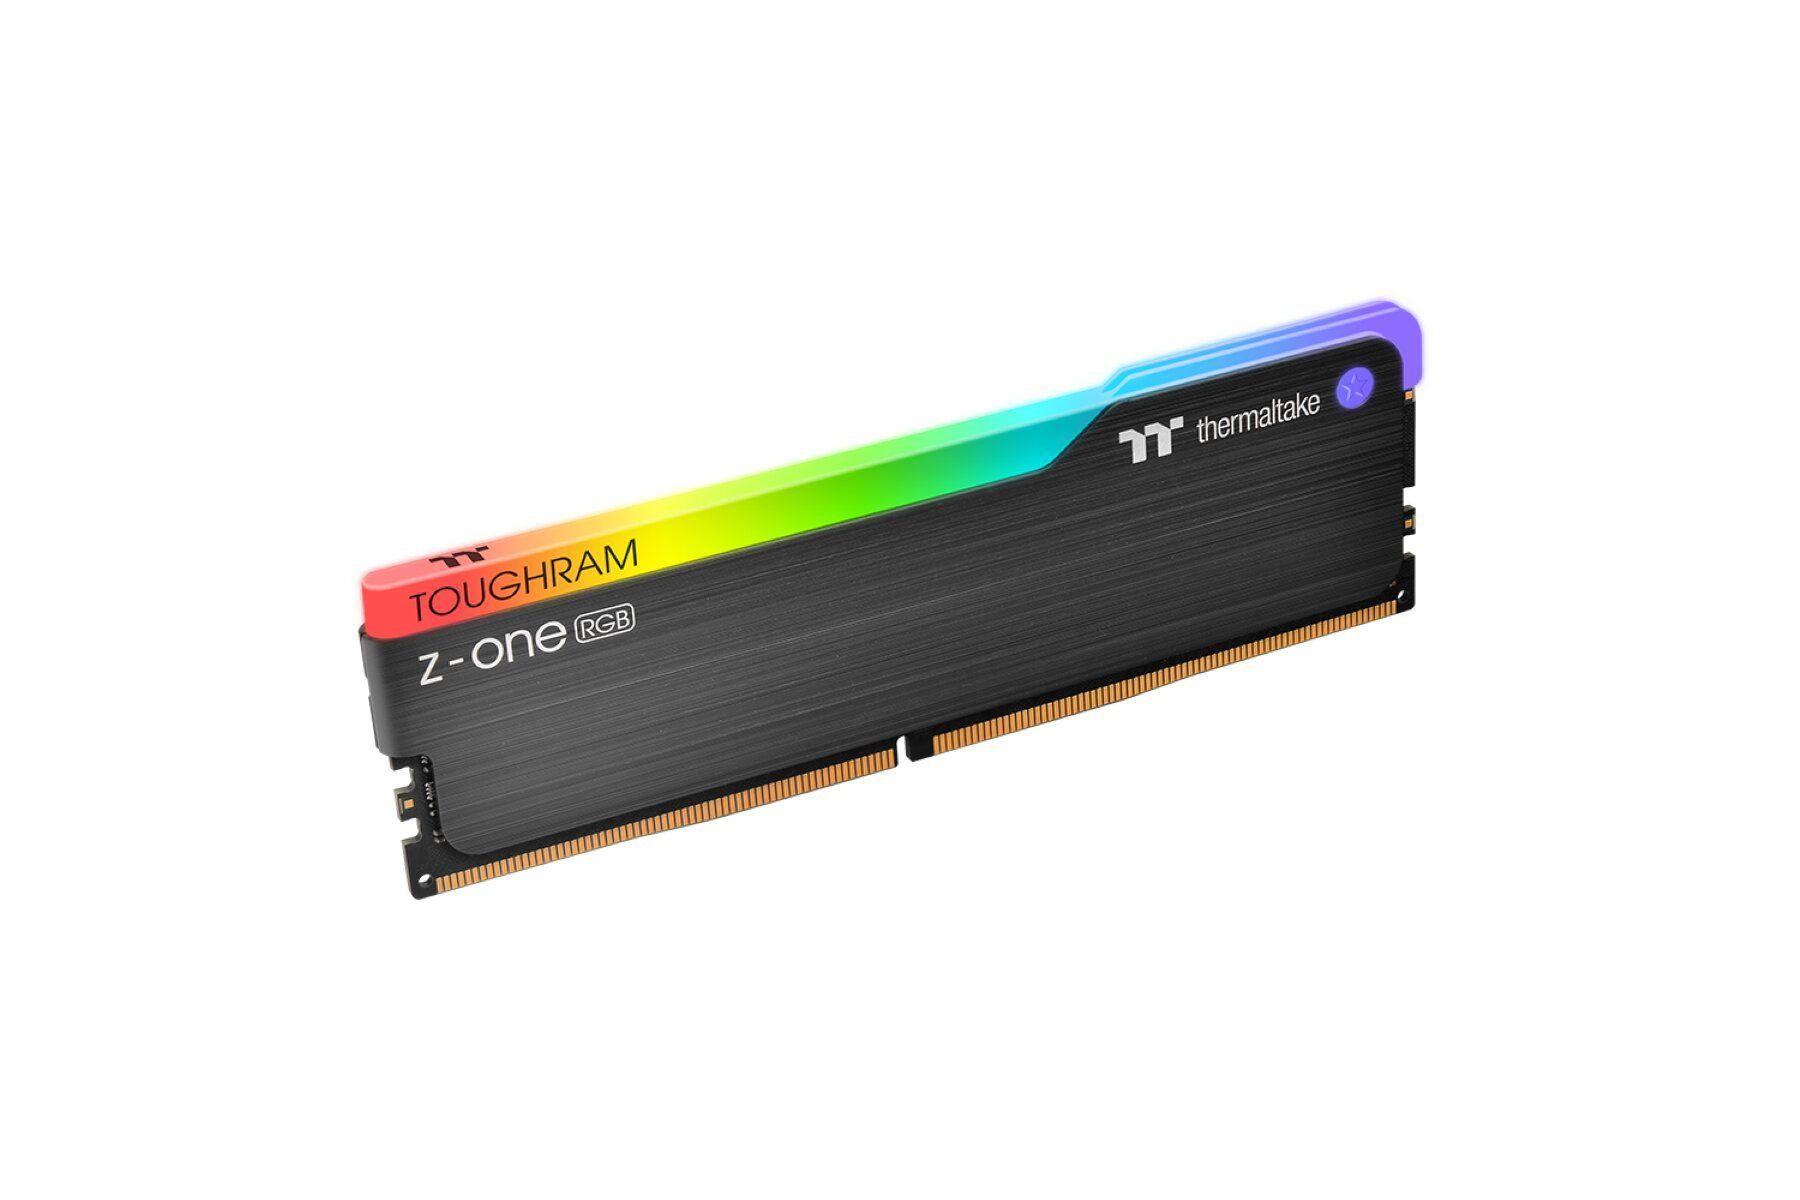 THERMALTAKE TOUGHRAM Z-ONE RGB Arbeitsspeicher DDR4 GB 16